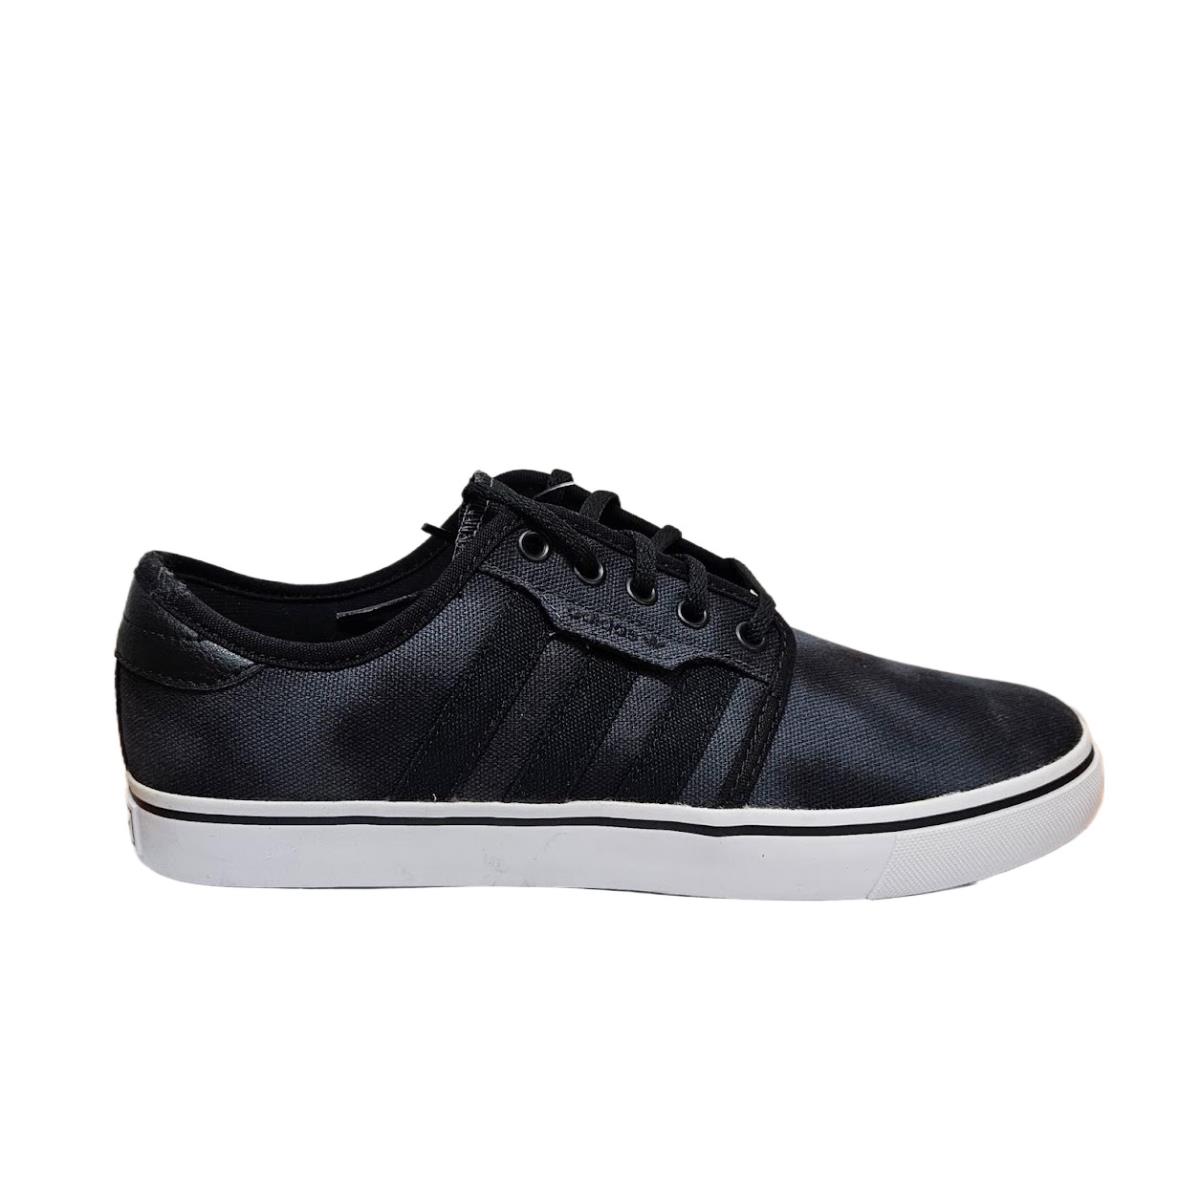 Adidas Men Seeley Skateboarding Shoe Grey / Black / White C76311